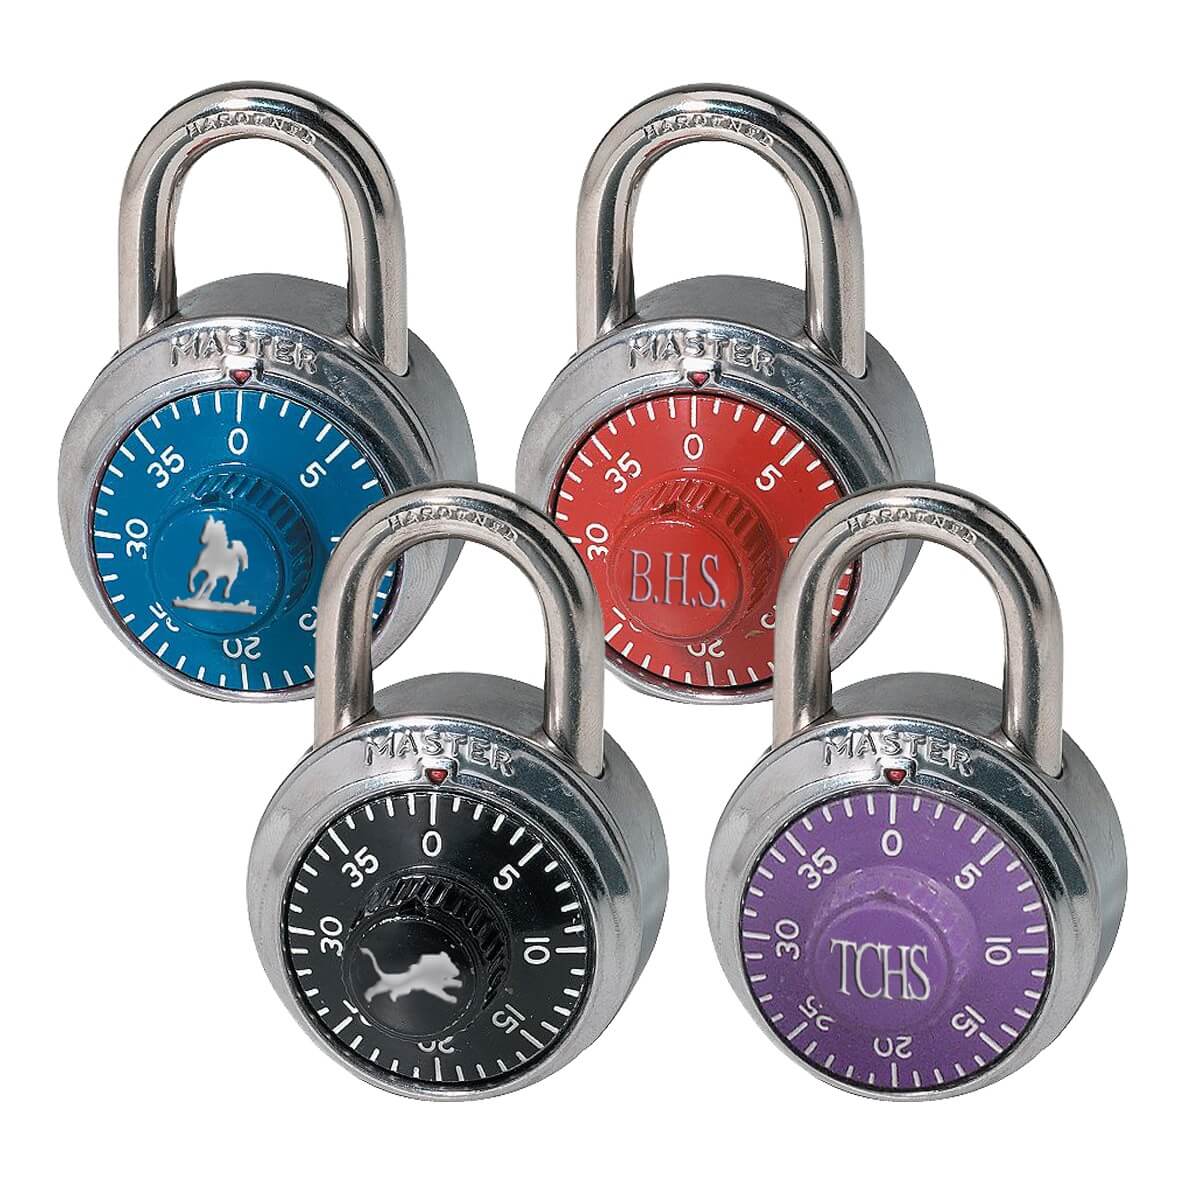 Master Lock Padlock 1525 1585 2010 2076 Control Key OEM Original Master Key V627 